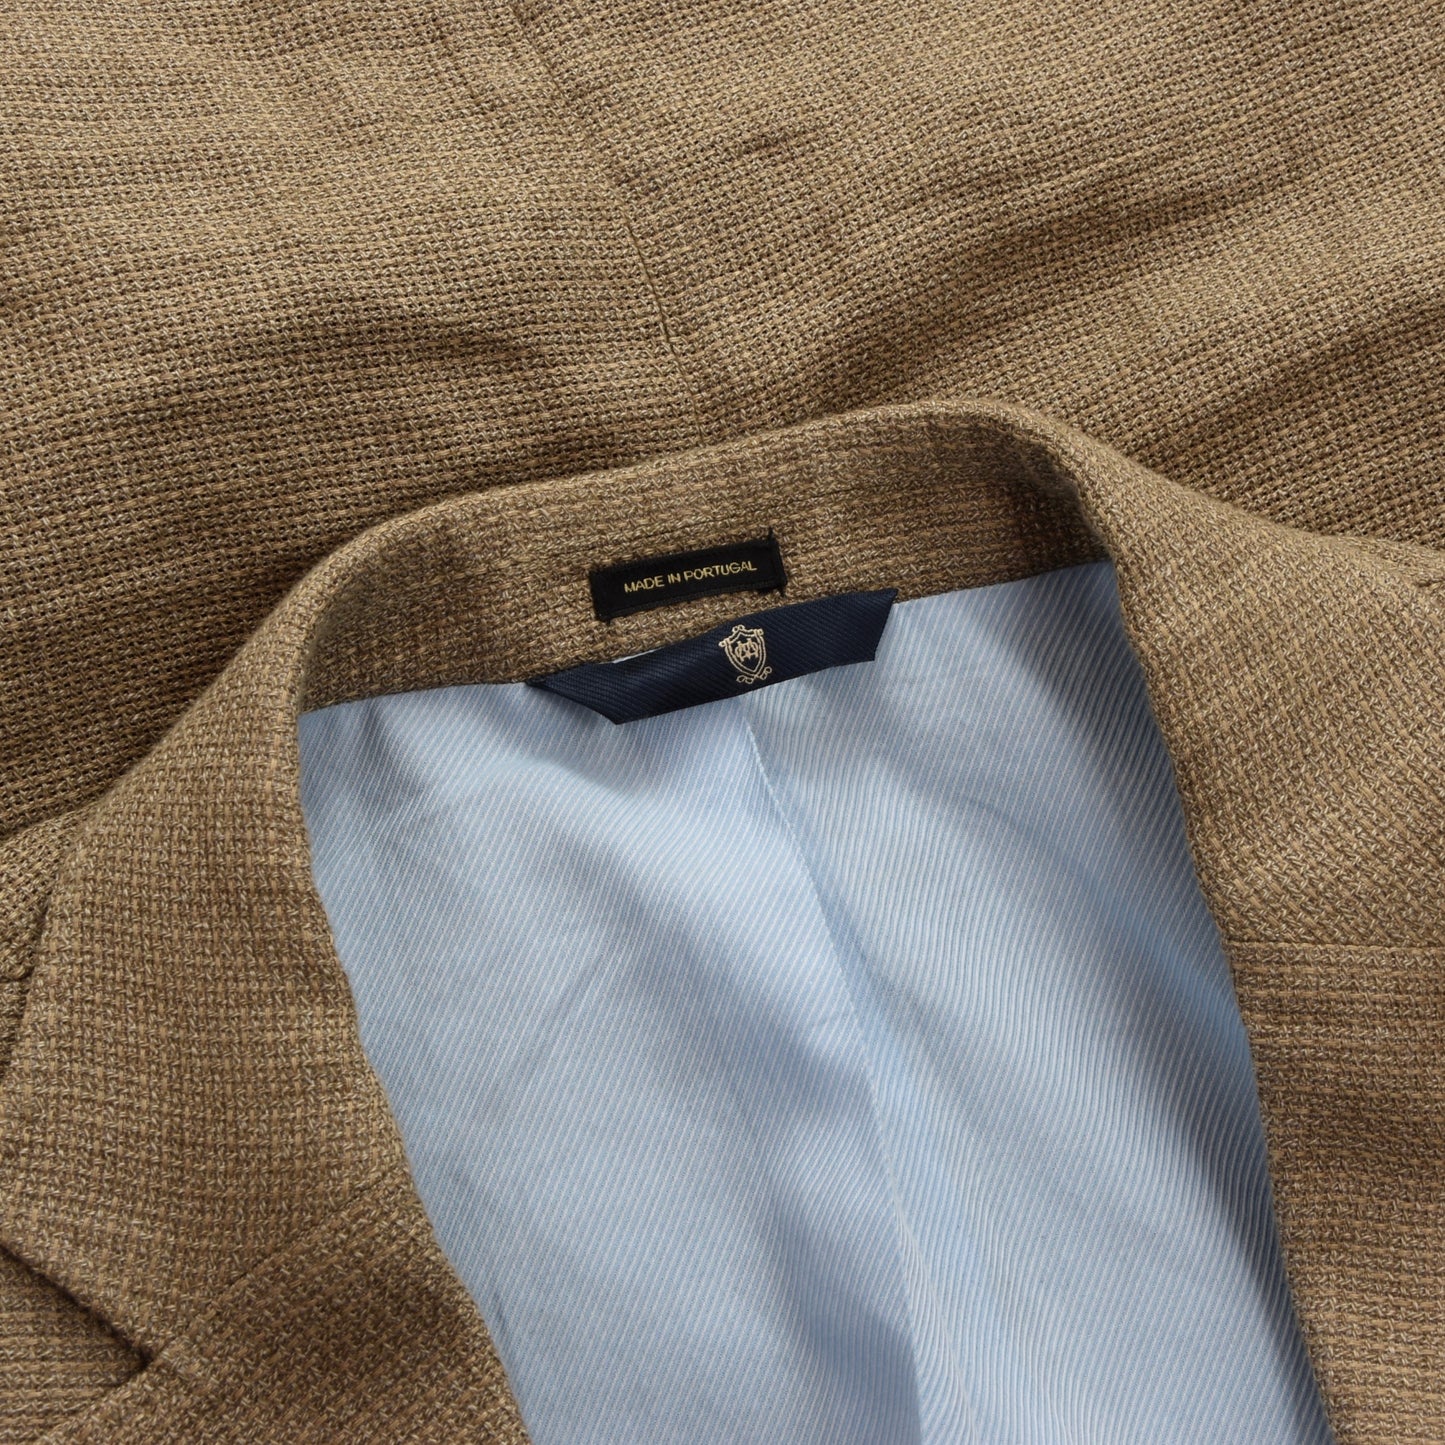 Massimo Dutti Cotton/Linen Jacket Size 52 - Tan/Beige